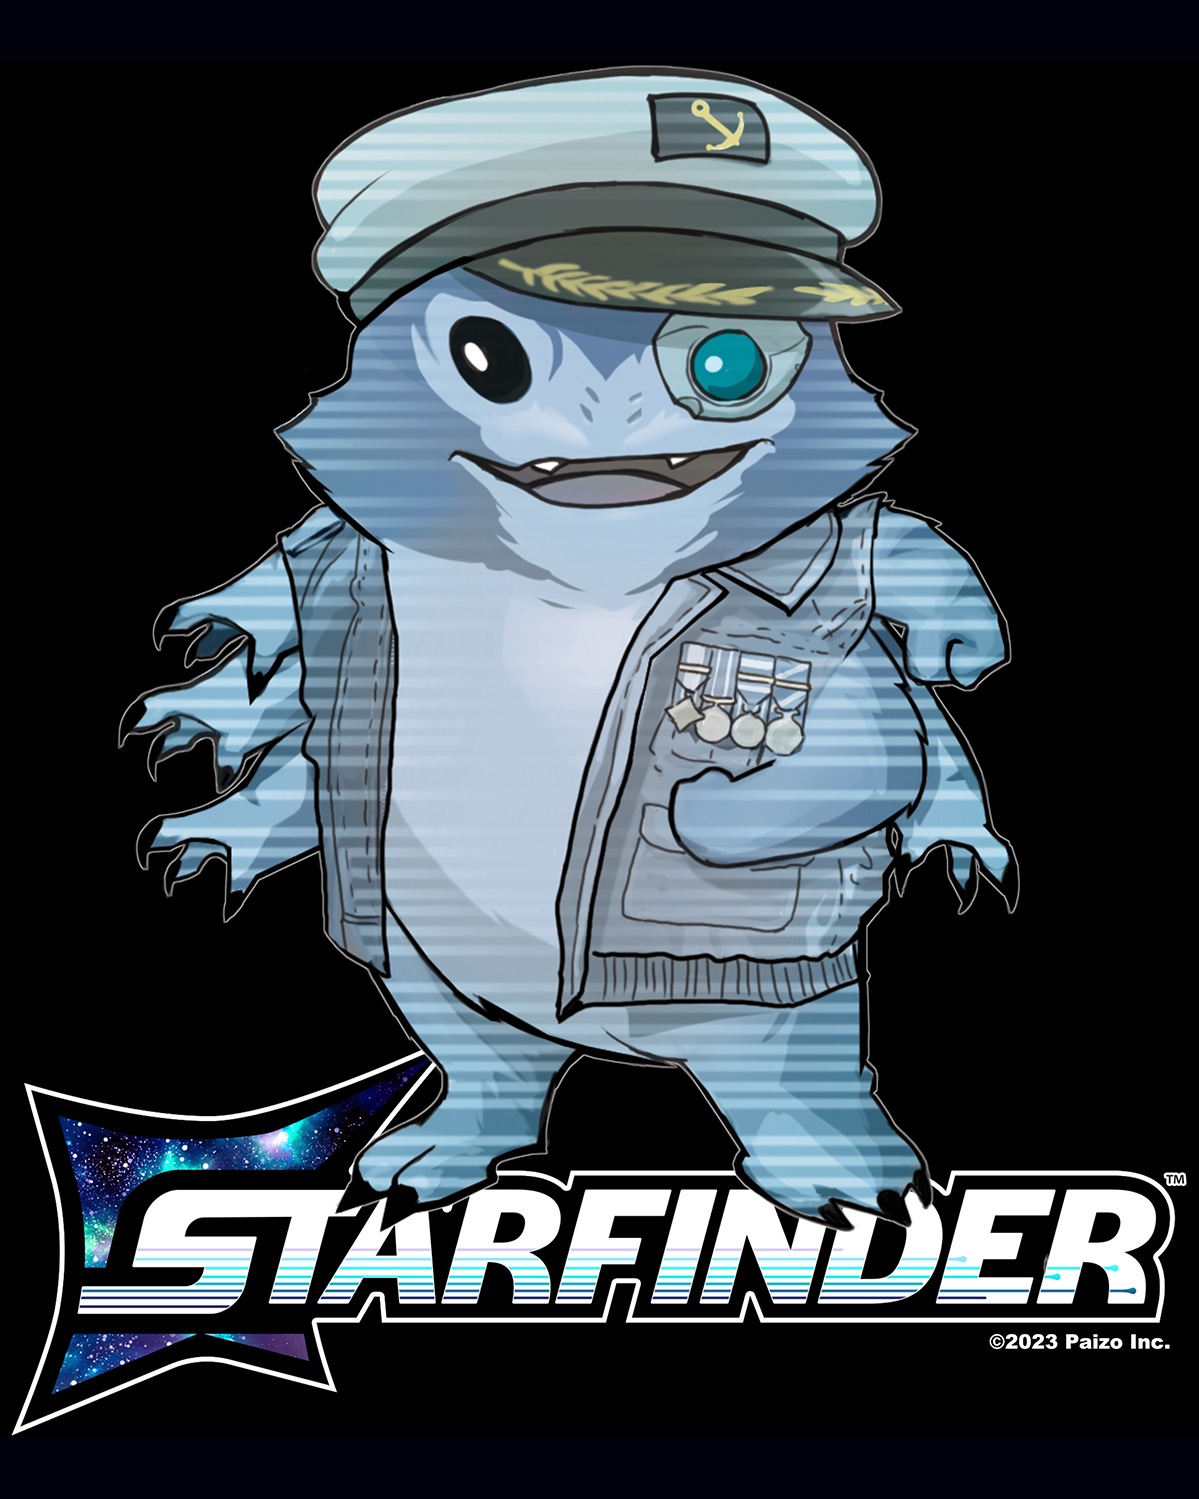 Starfinder Skittermander Captain Concierge standing over the starfinder second edition logo